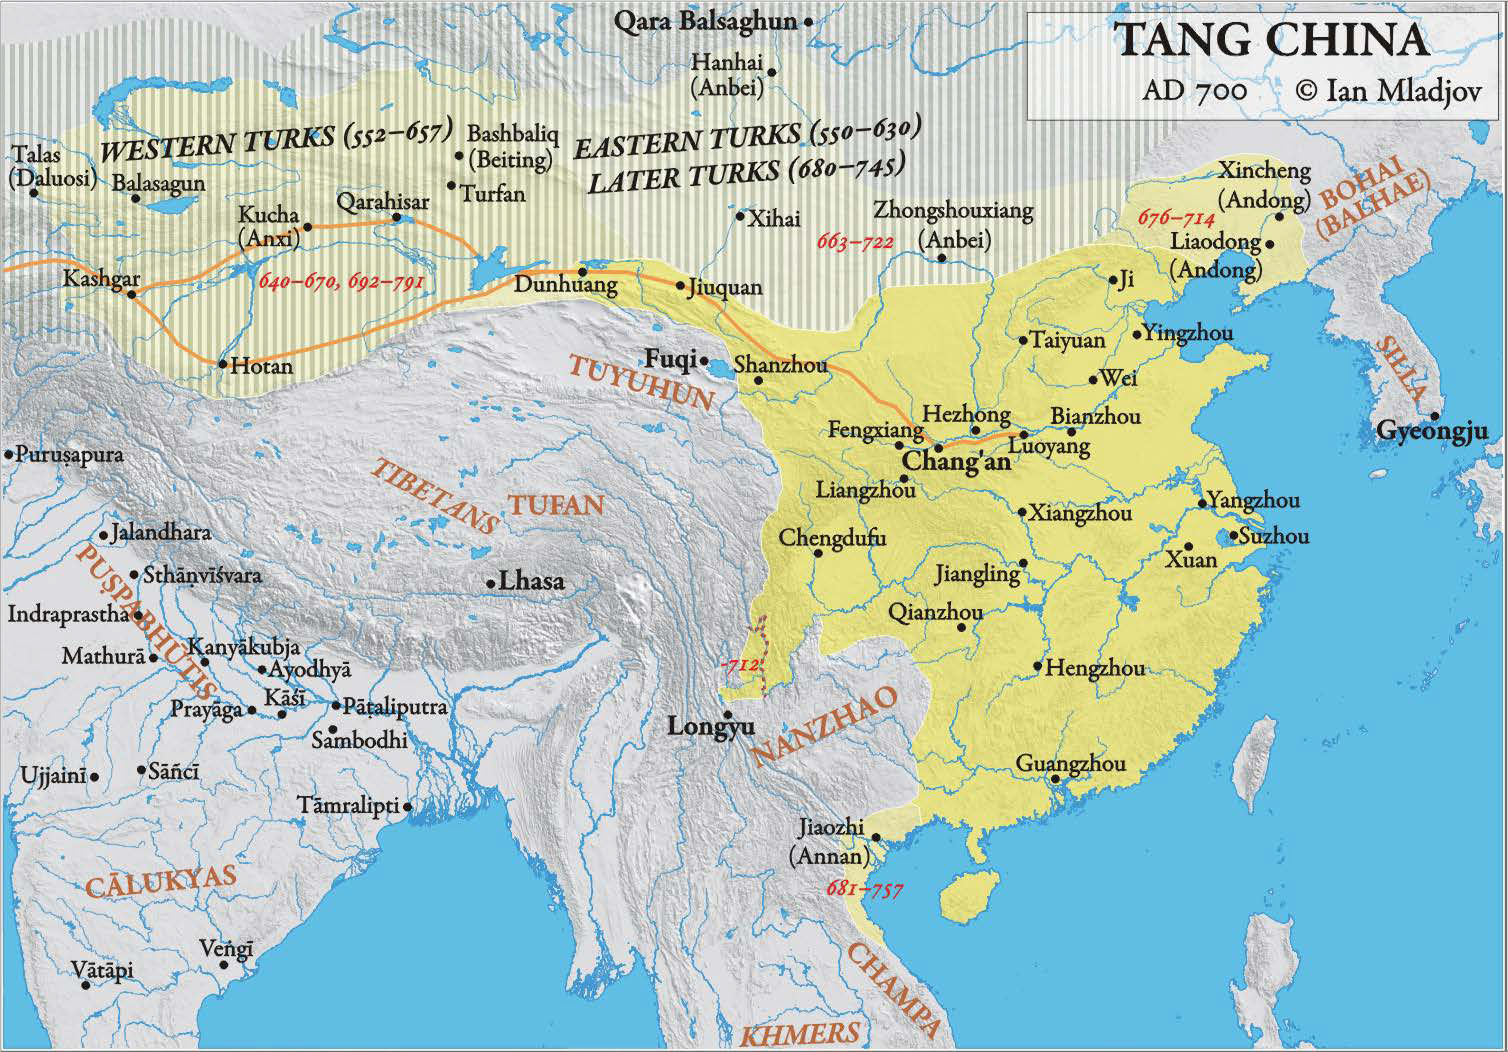 Династии Тан 618-907. Империя Тан в Китае карта. Династия Тан в Китае карта. Империя Тан карта.